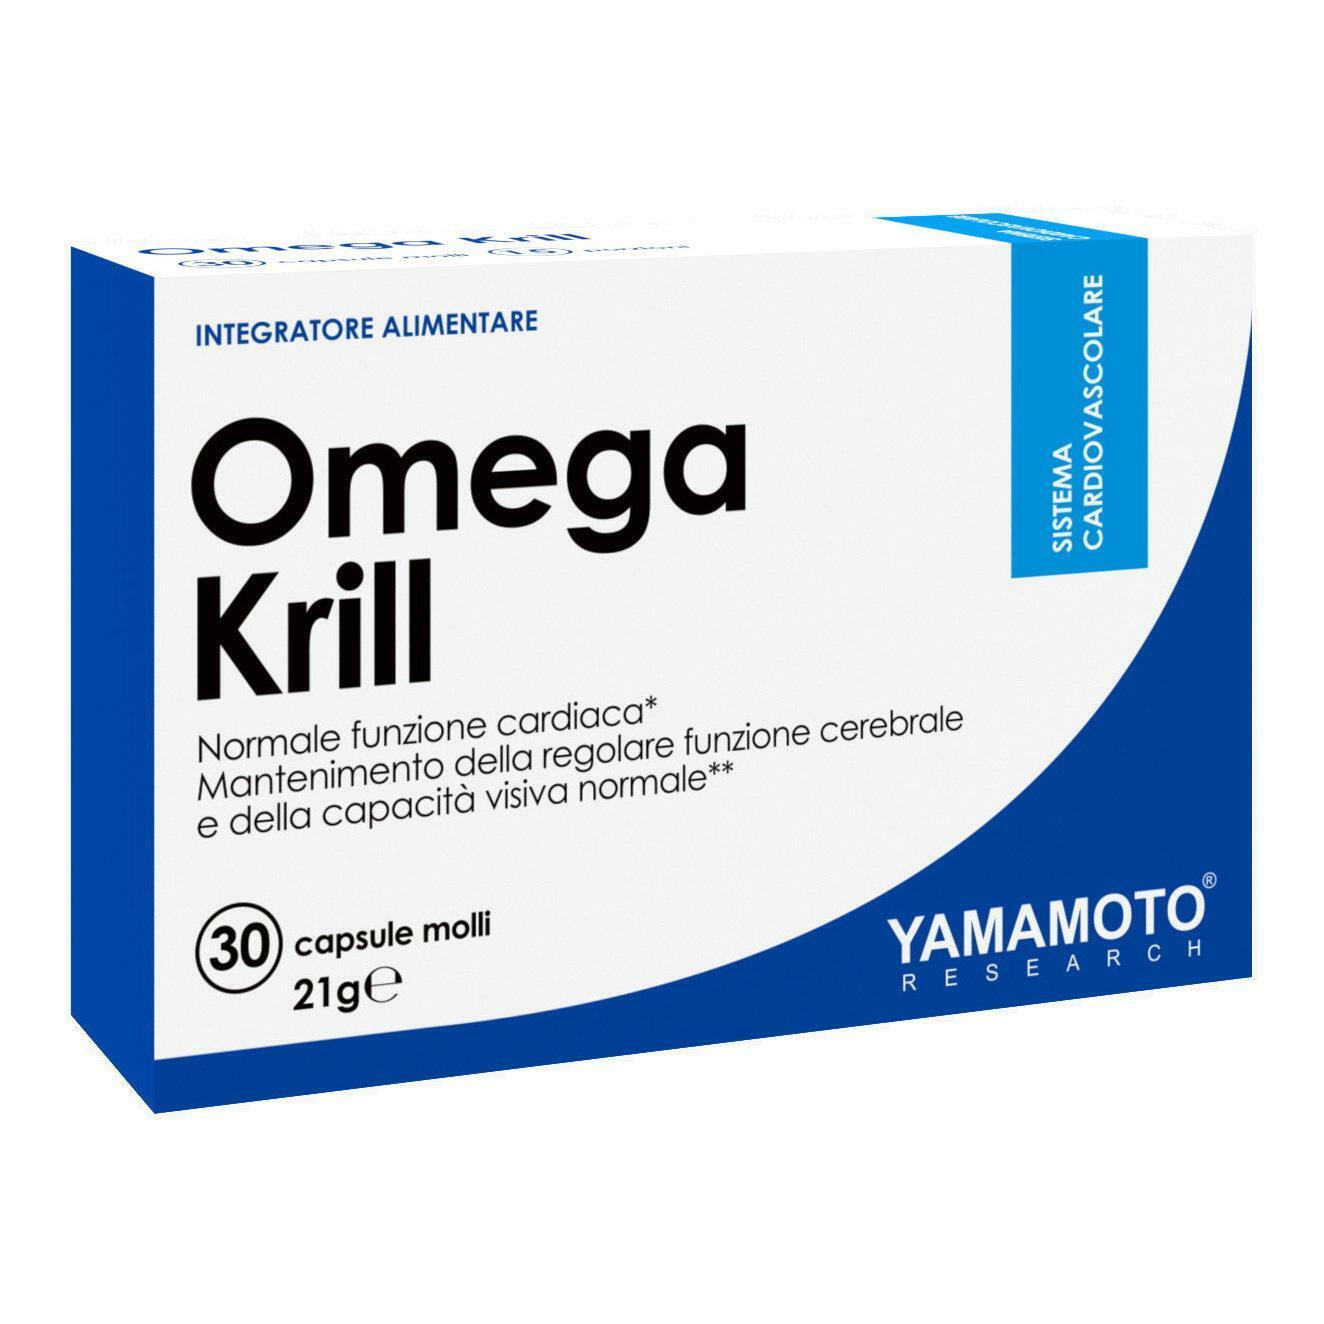 yamamoto research omega krill - 30 capsule molli